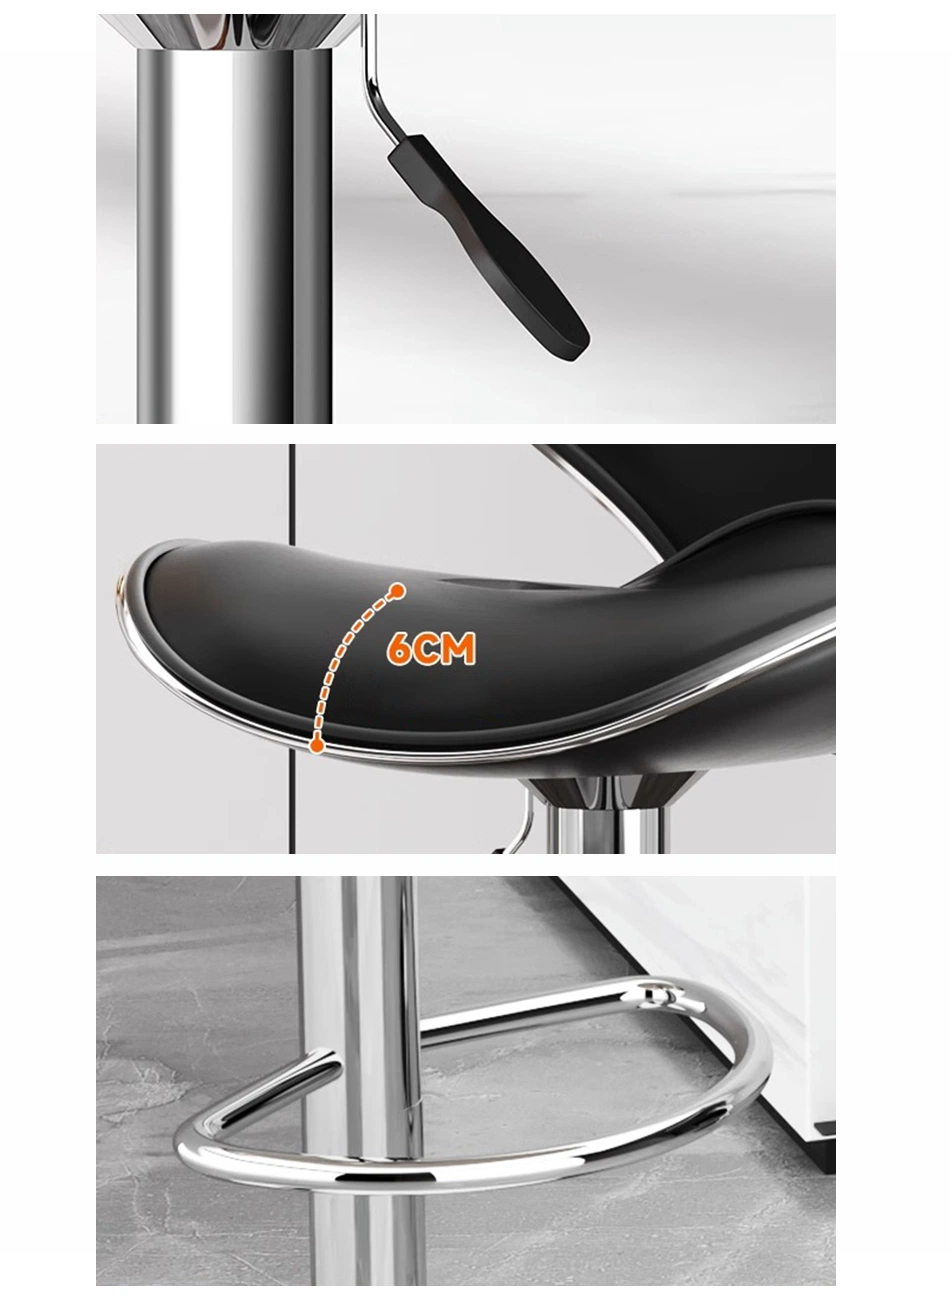 Modern Luxury Adjustable High Back PU Leather Swivel Counter Bar Stool High Chair